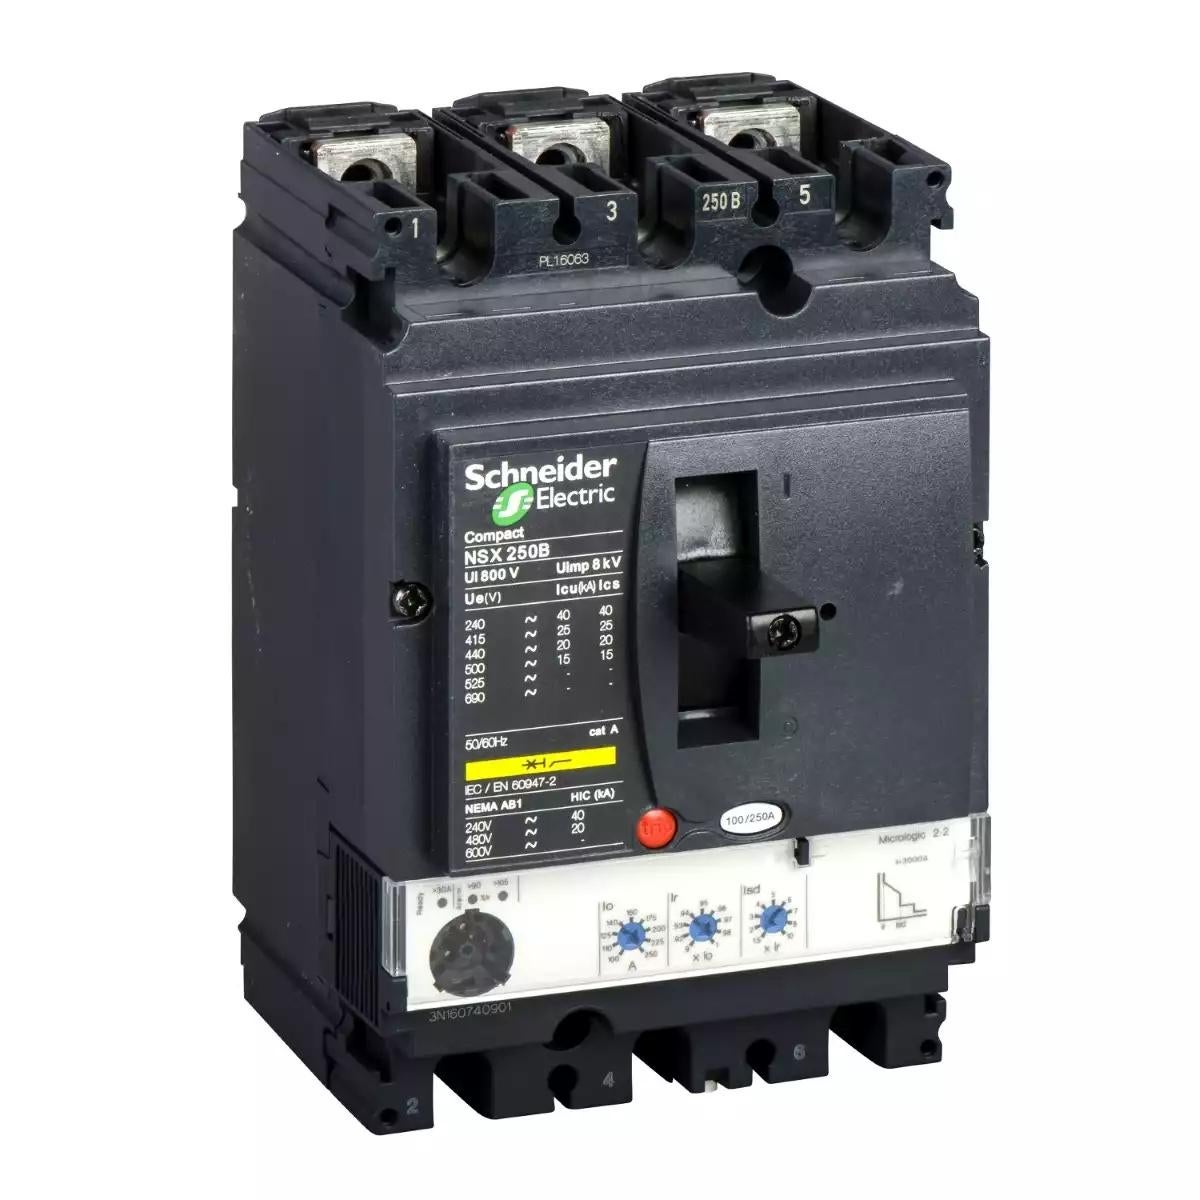 Schneider Electric Compact NSX <630 circuit breaker NSX250N - Micrologic 2.2 - 250 A - 3 poles 3d